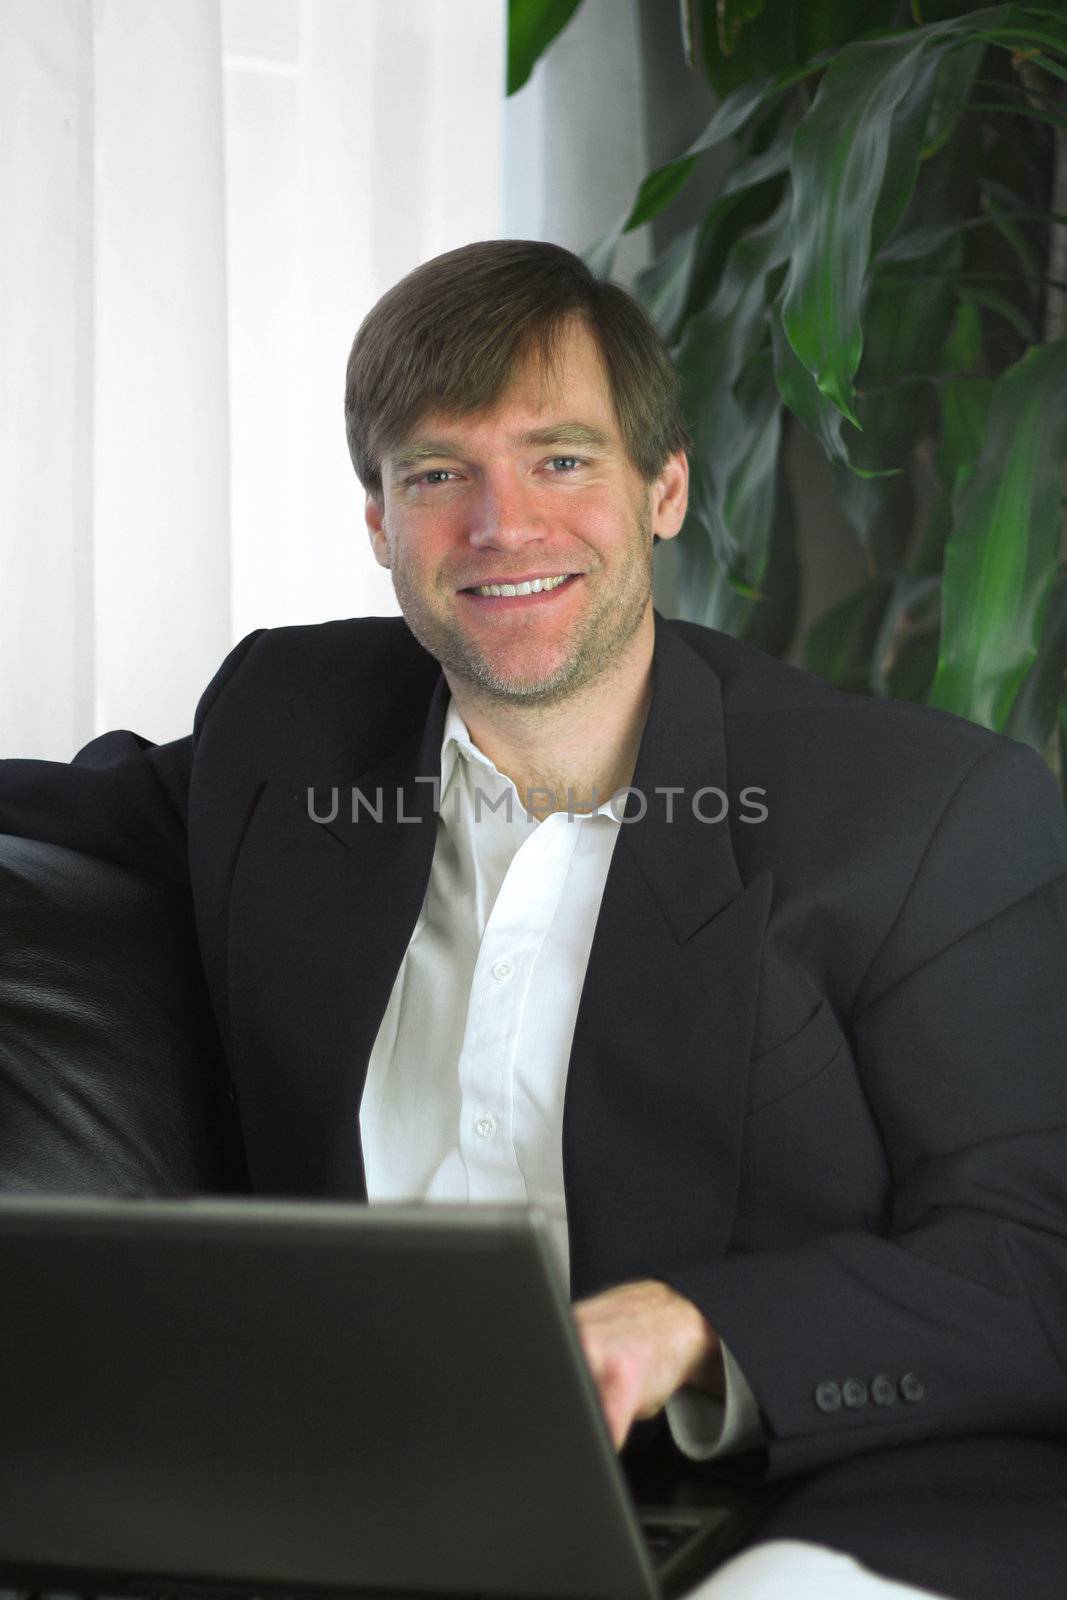 Handsome businessman working on laptop